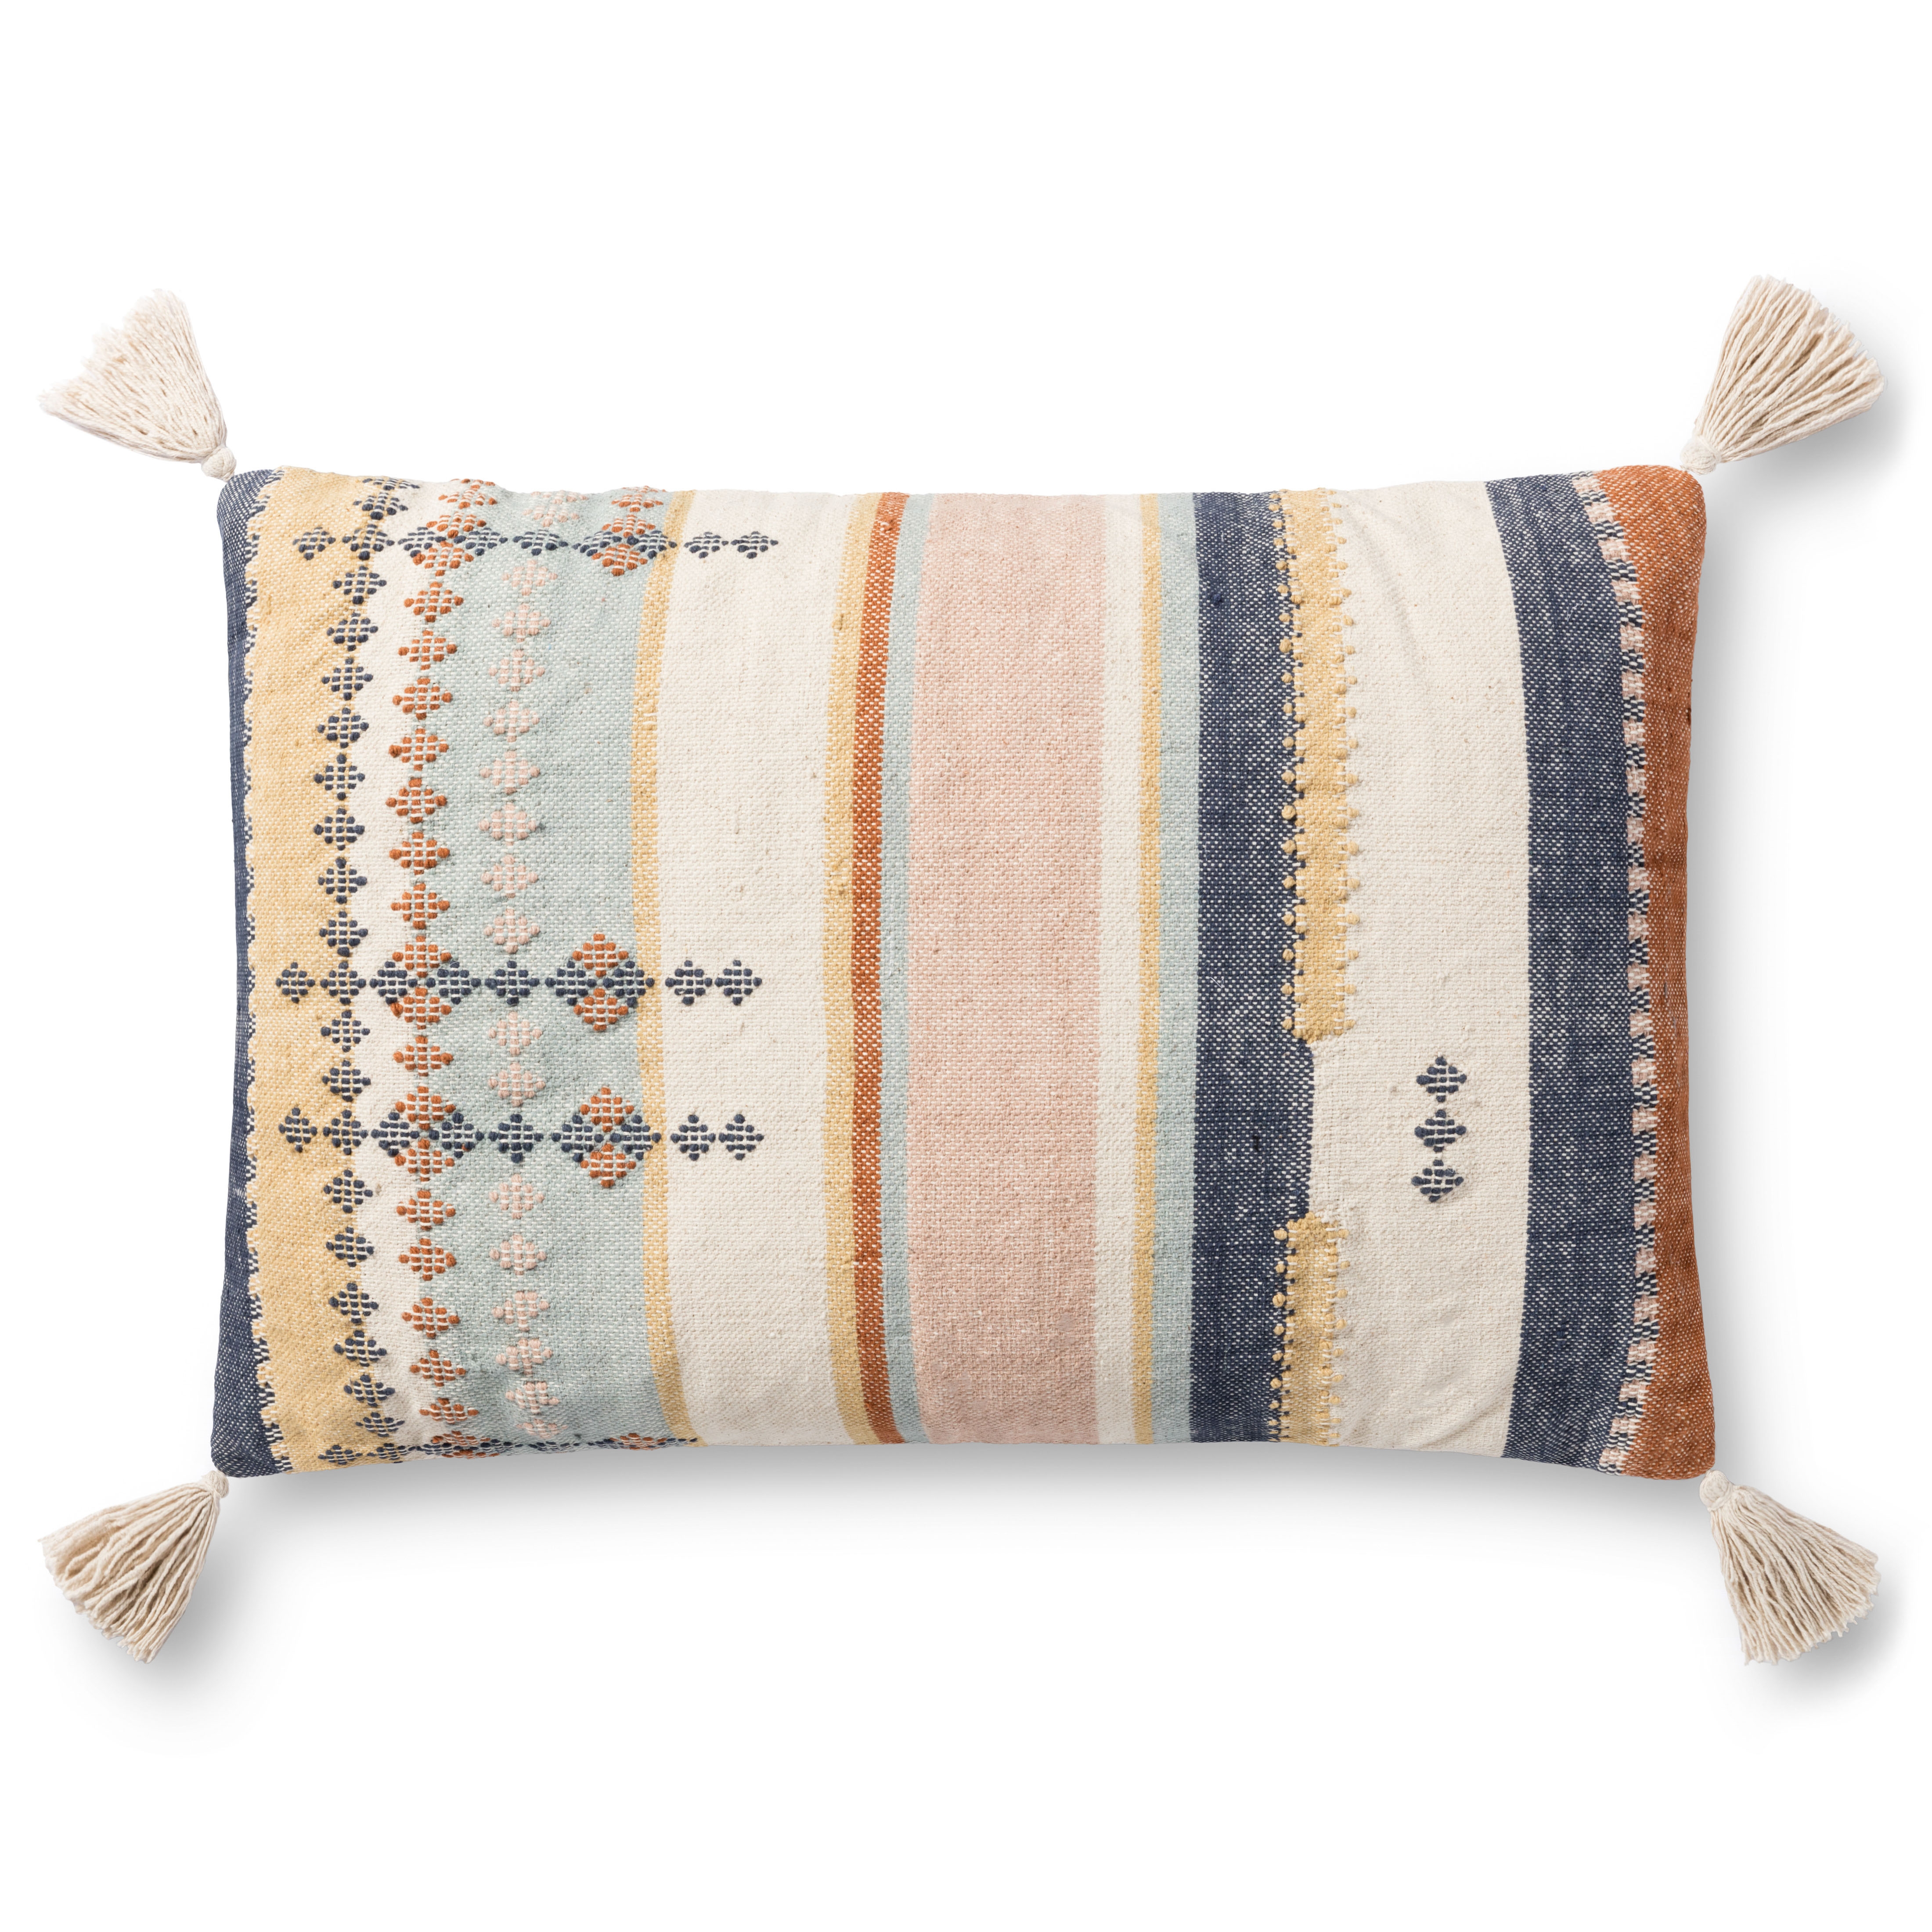 Desert Lumbar Throw Pillow with insert, Multicolor, 26" x 16" - Image 0